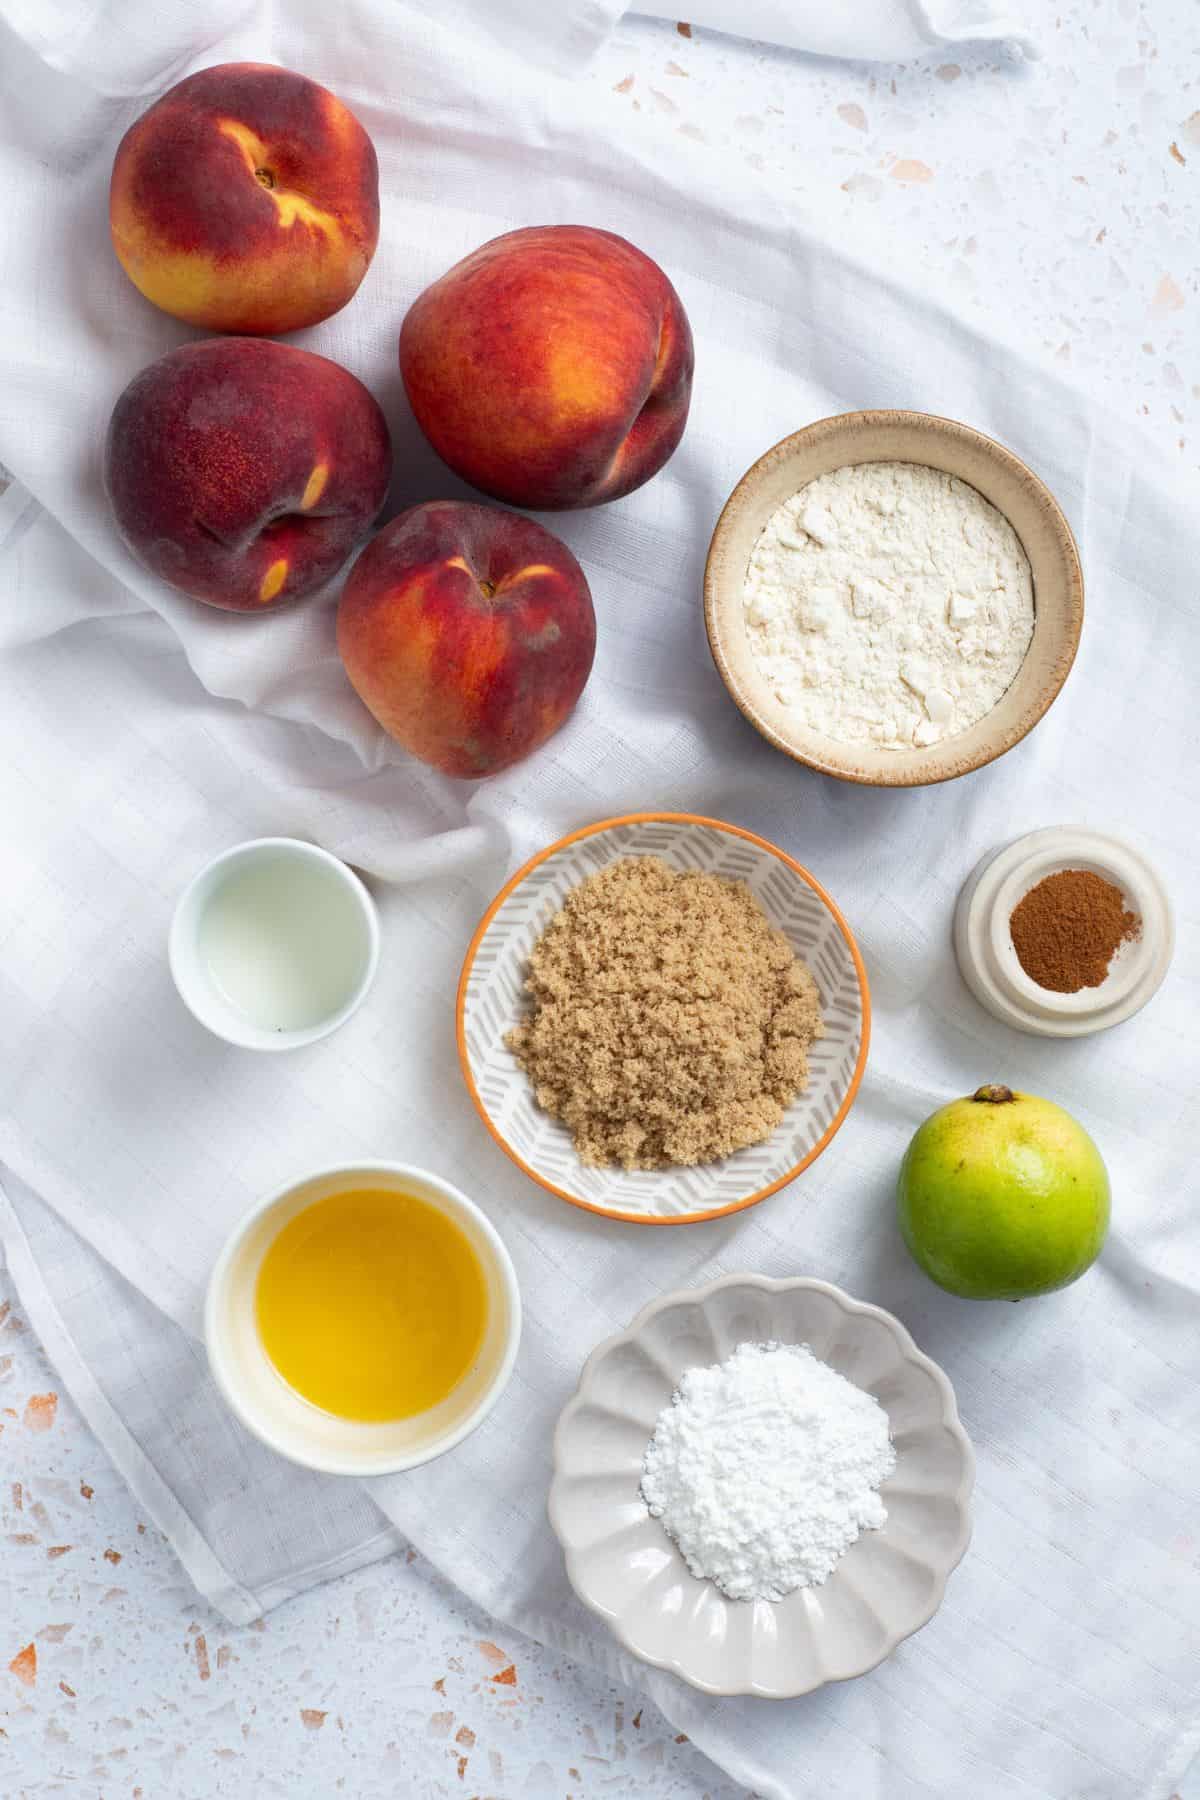 Peach cobbler recipe ingredients on white background.